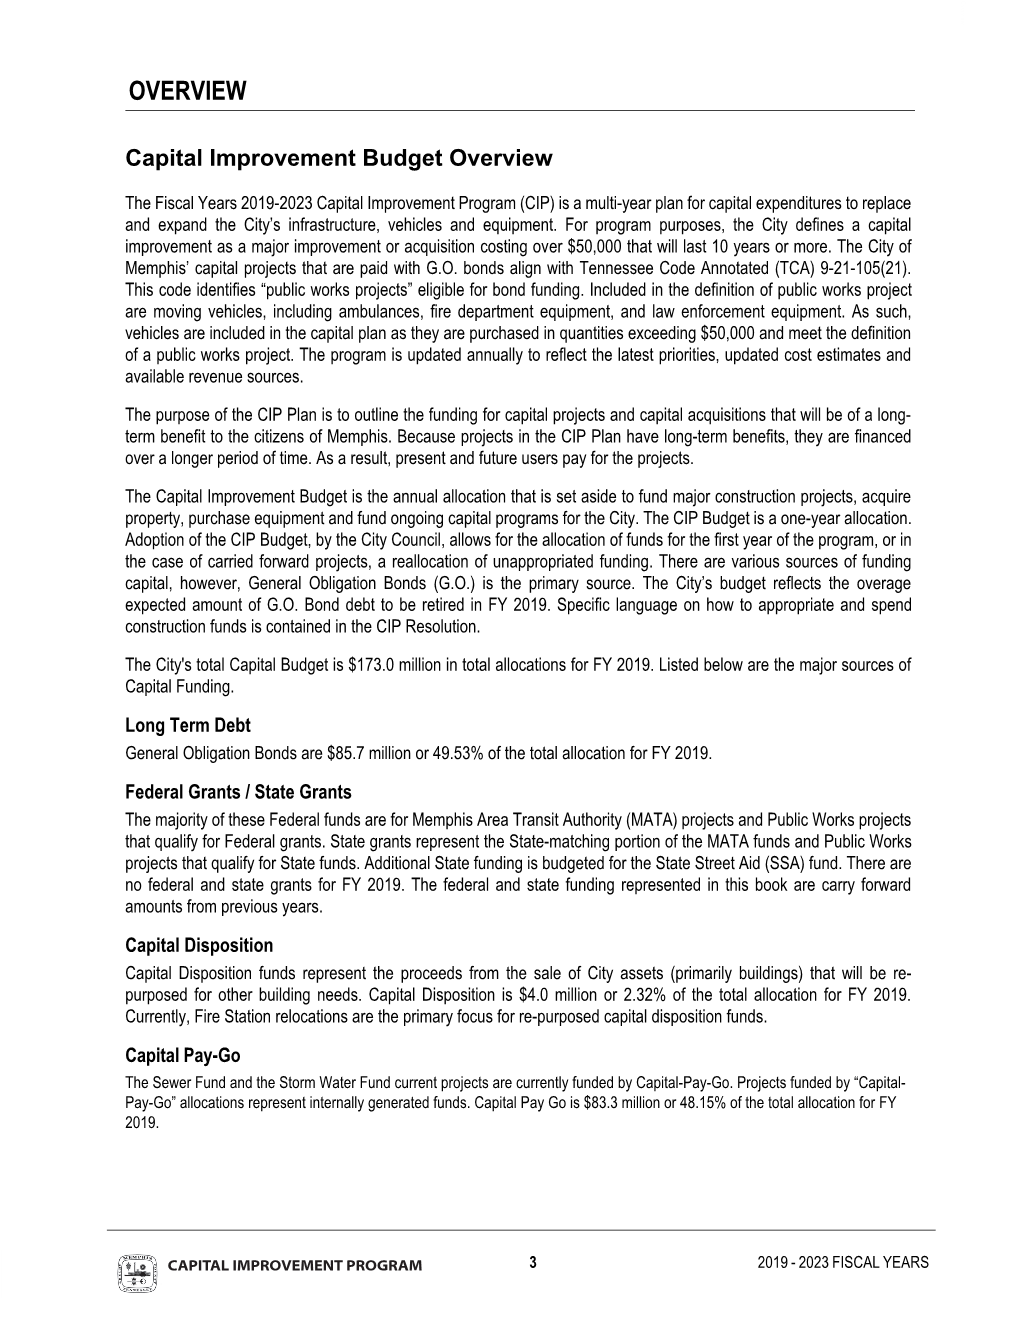 Capital Improvement Budget Overview